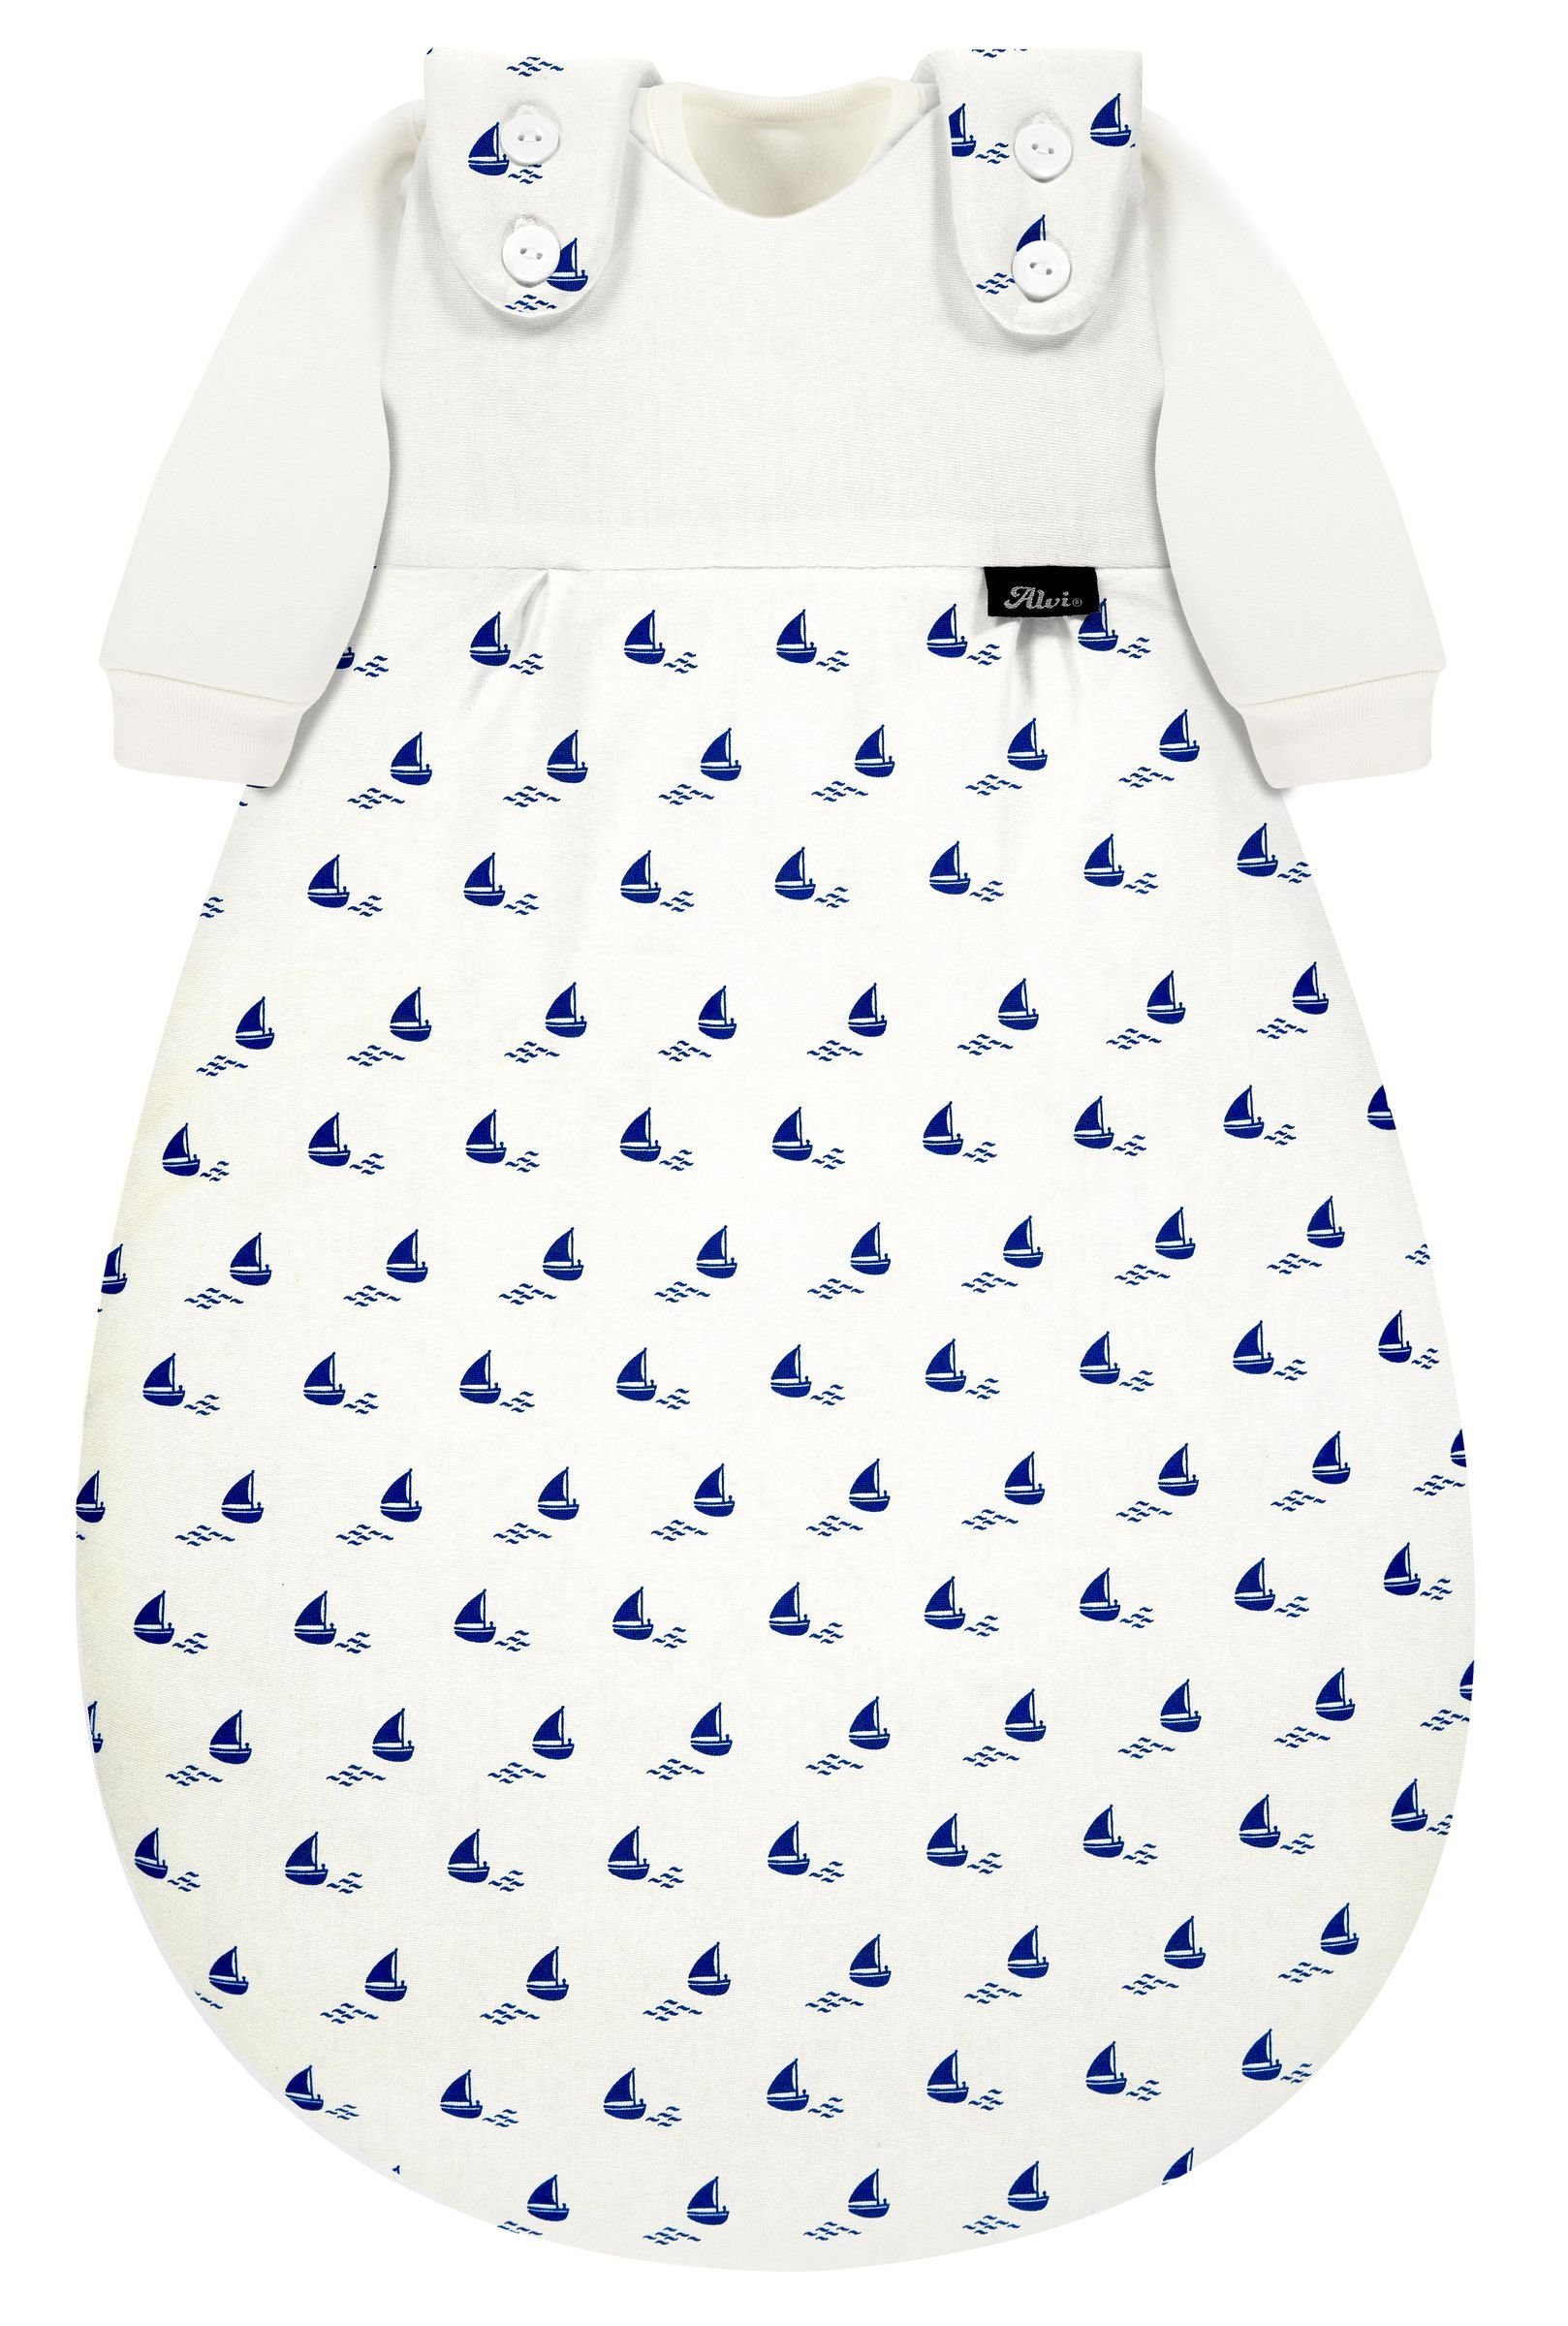 Alvi® Babyschlafsack little sailer